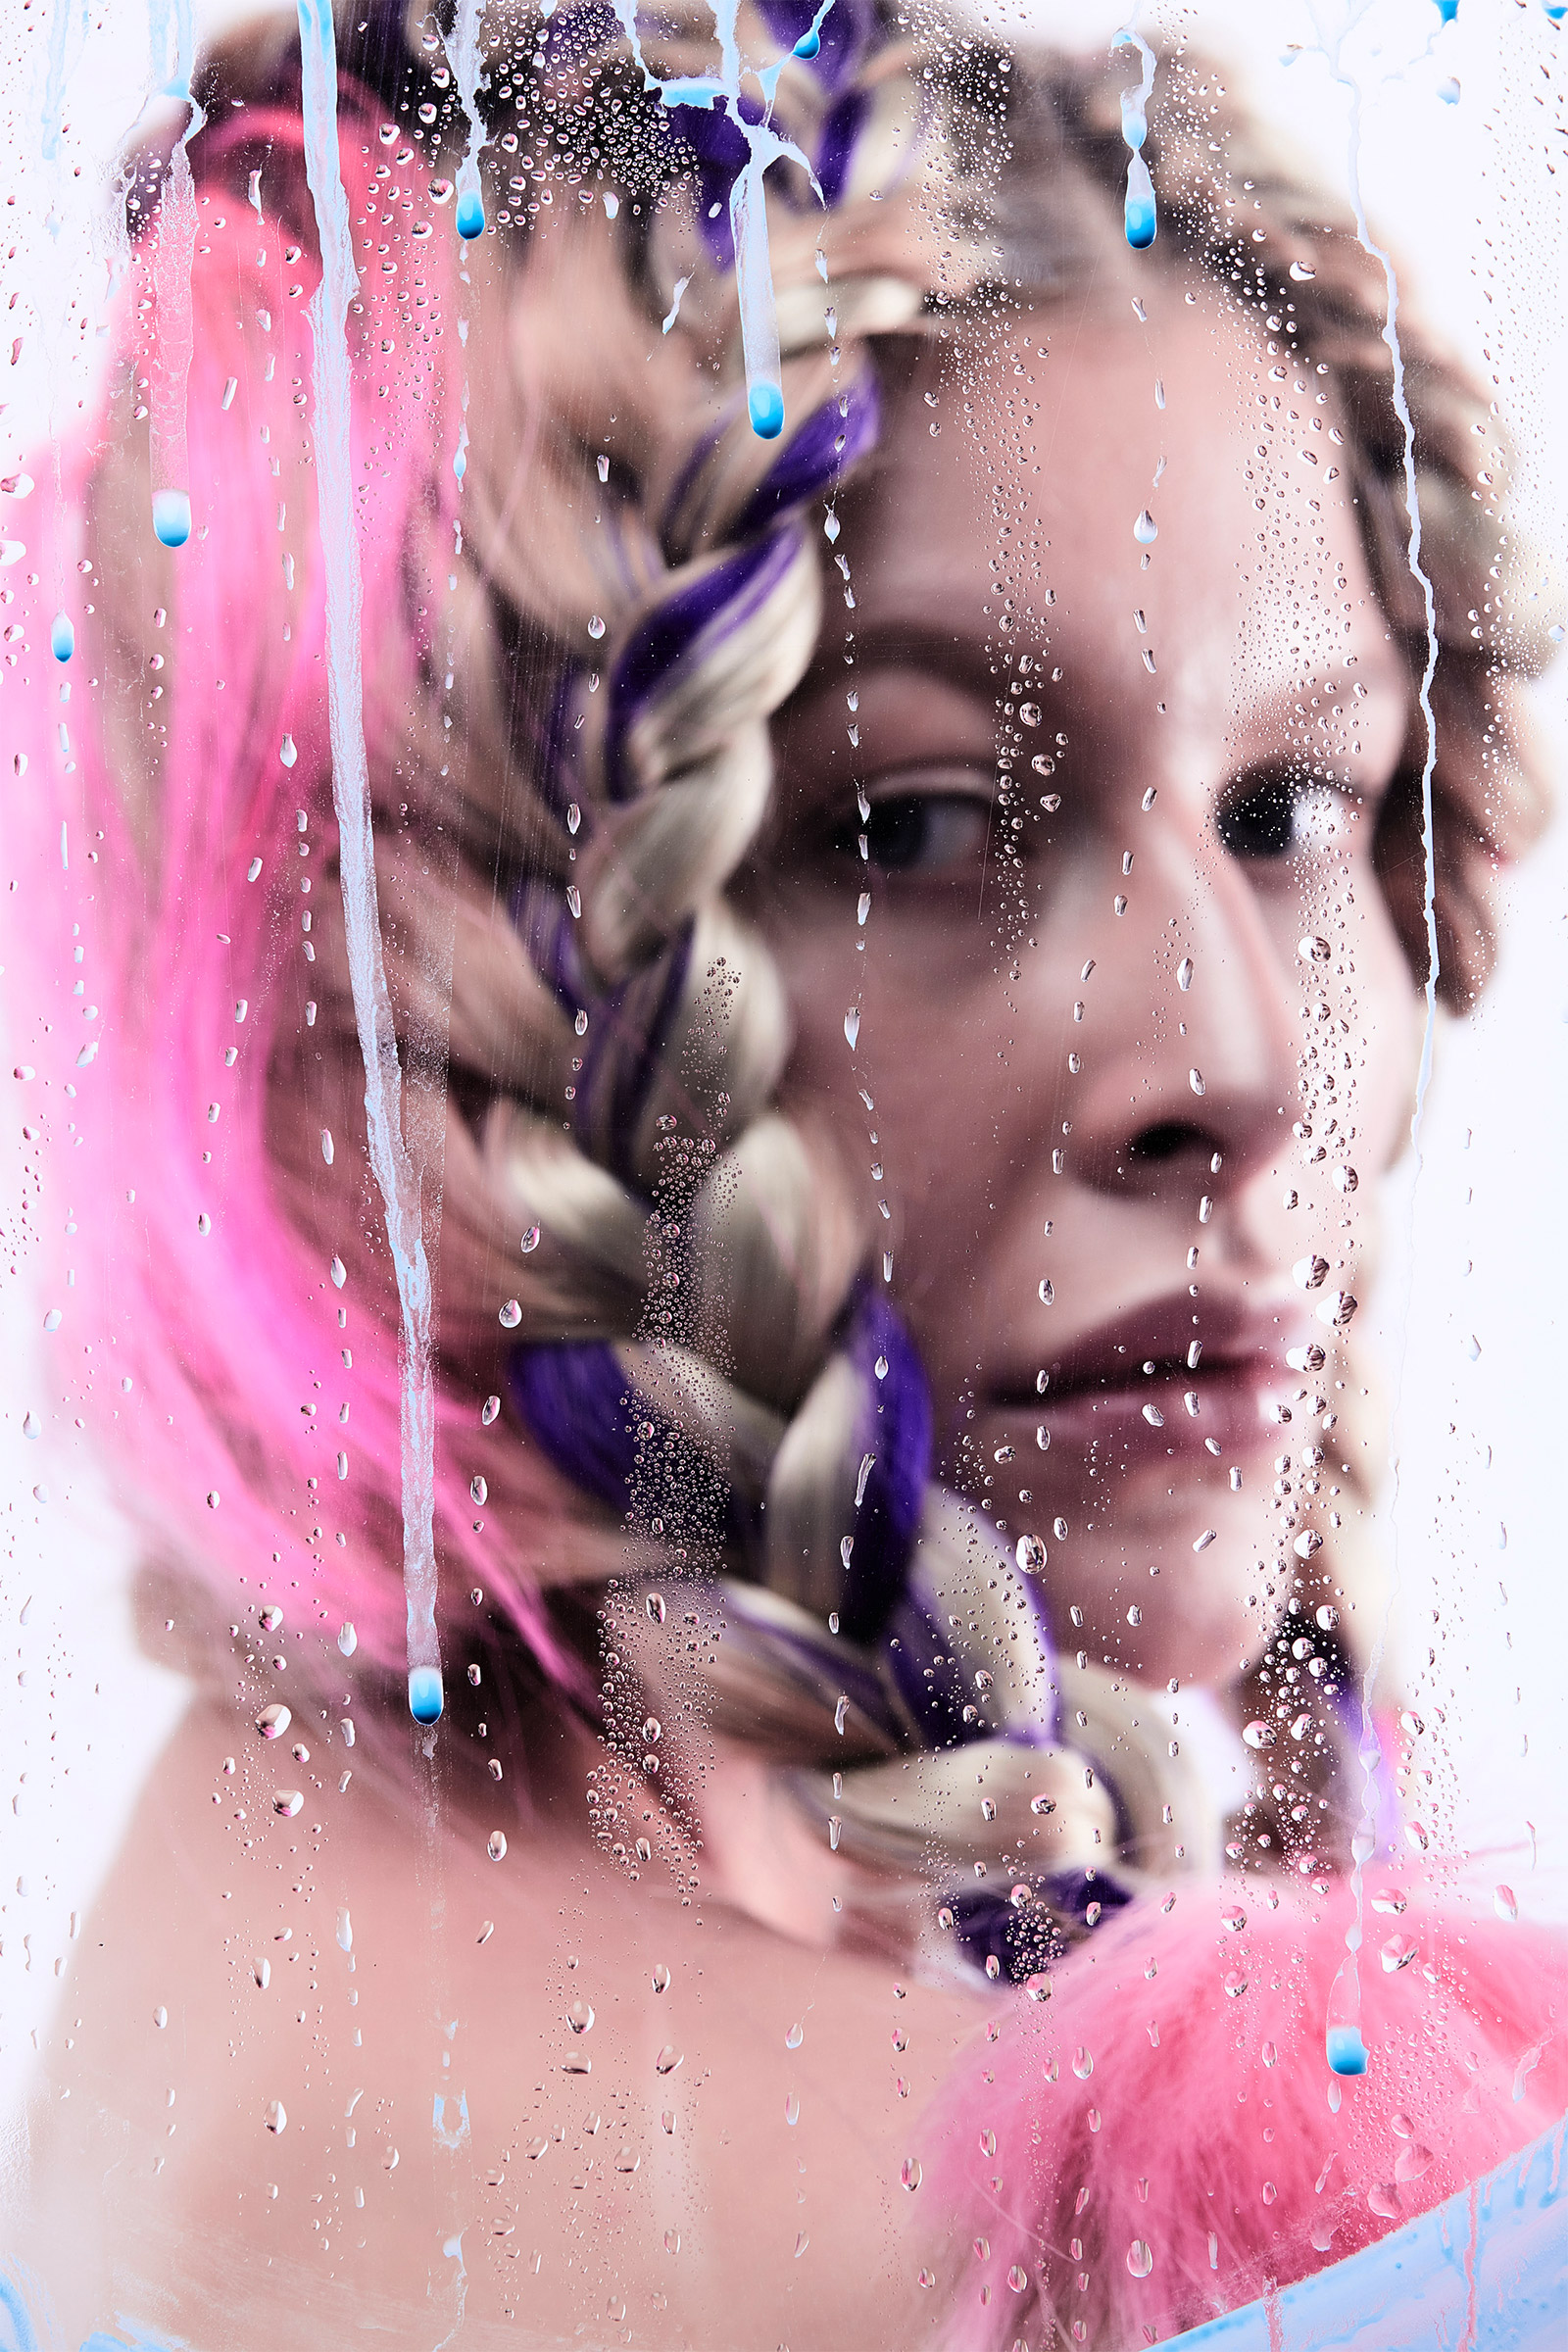 People 1600x2400 women model long hair portrait display braids blonde blurred glass water drops face depth of field pink water on glass